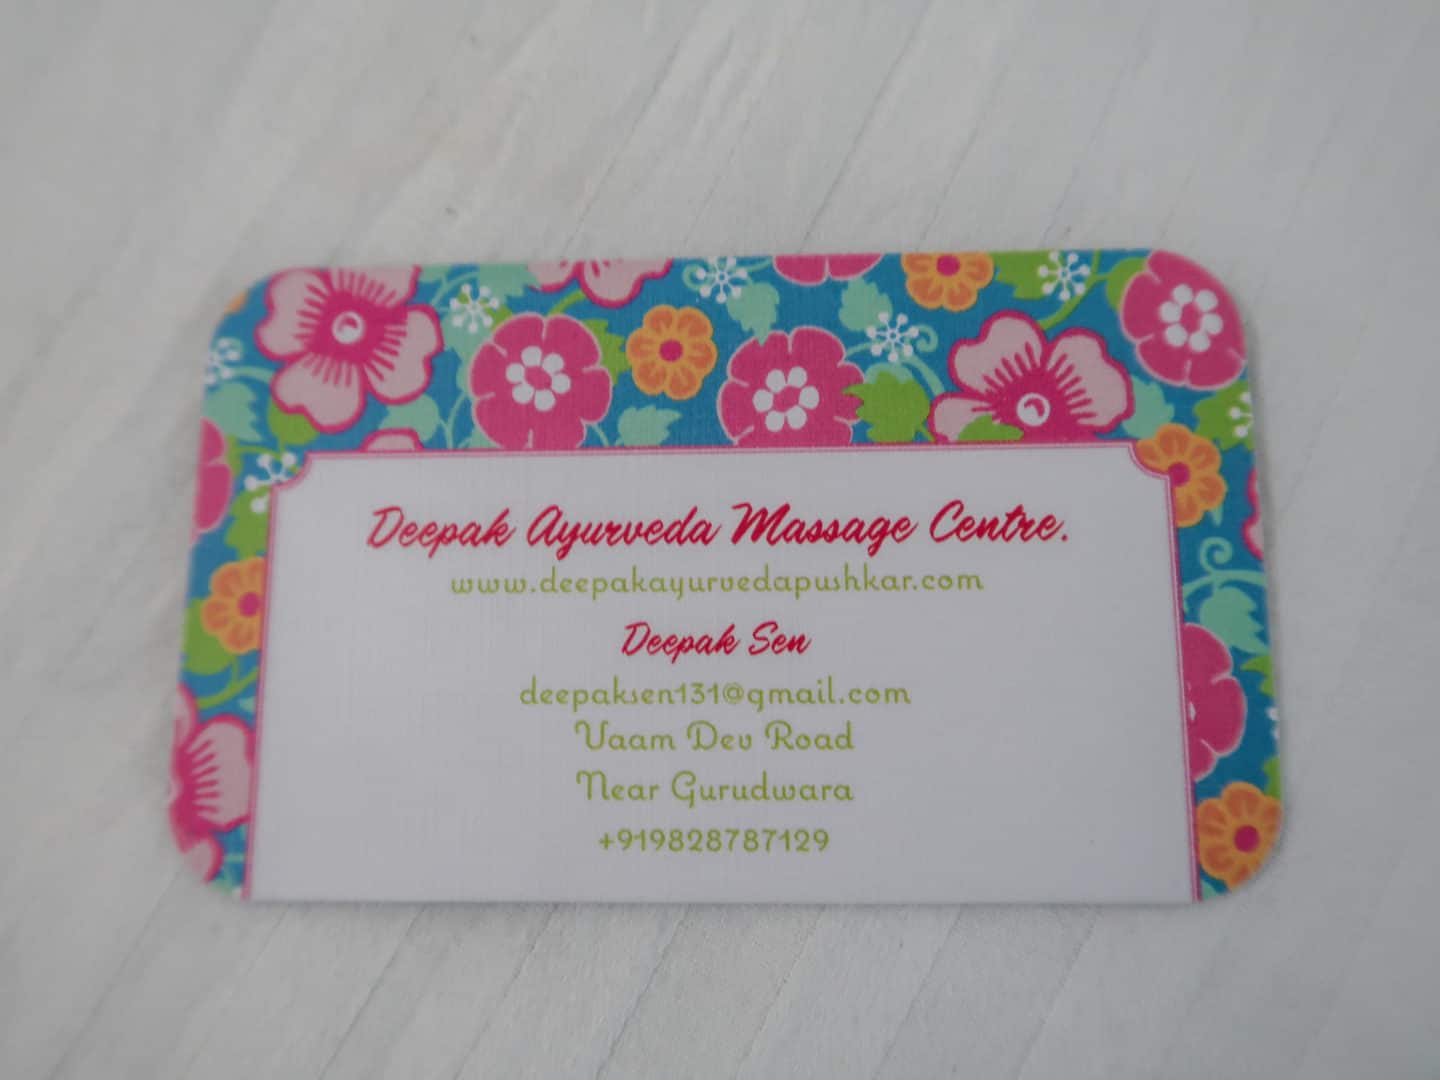 Deepak Ayurveda Massage Centre Pushkar